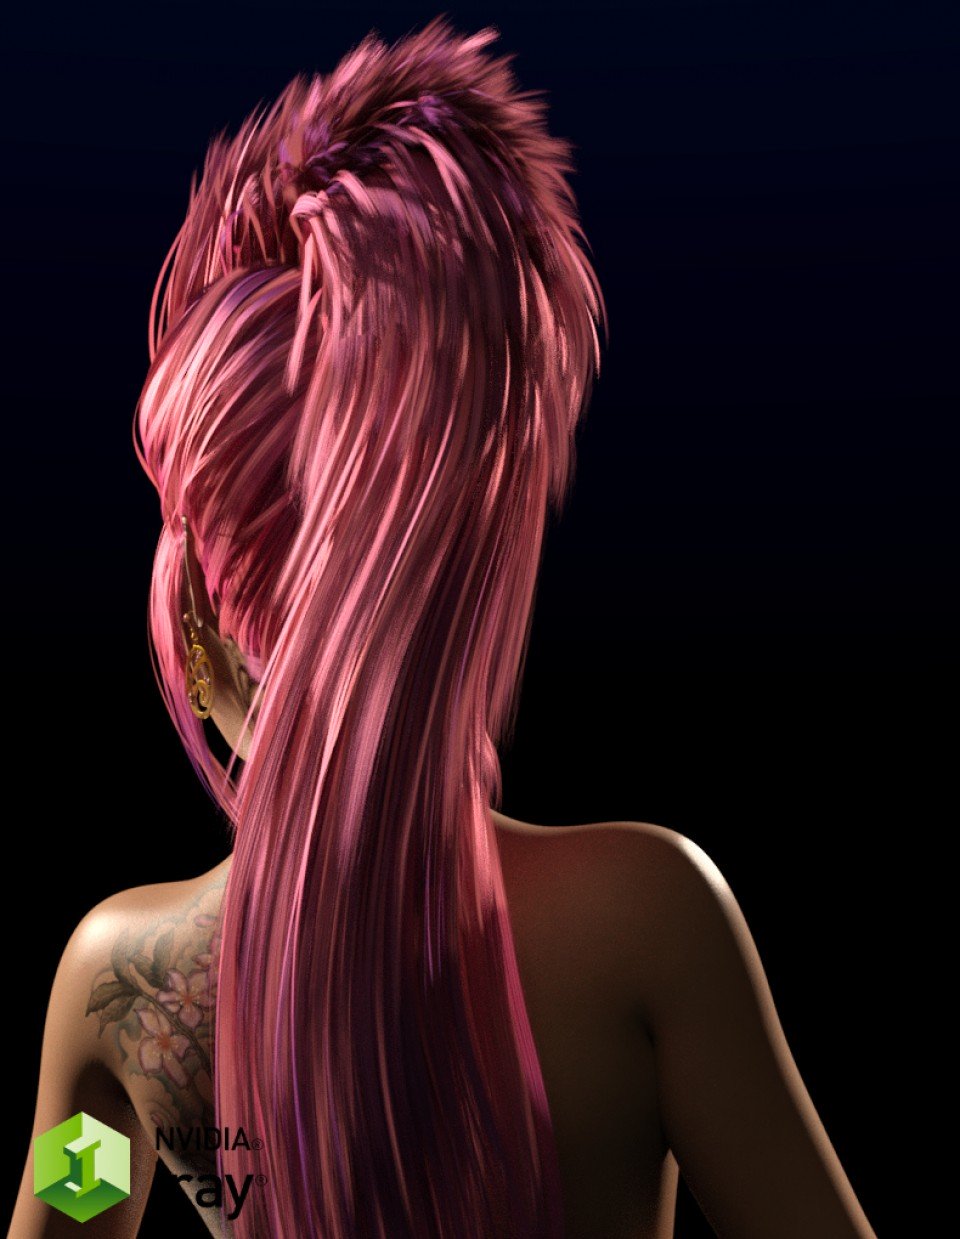 Iray 13 Shades of Pink for DAZ Studio_DAZ3DDL